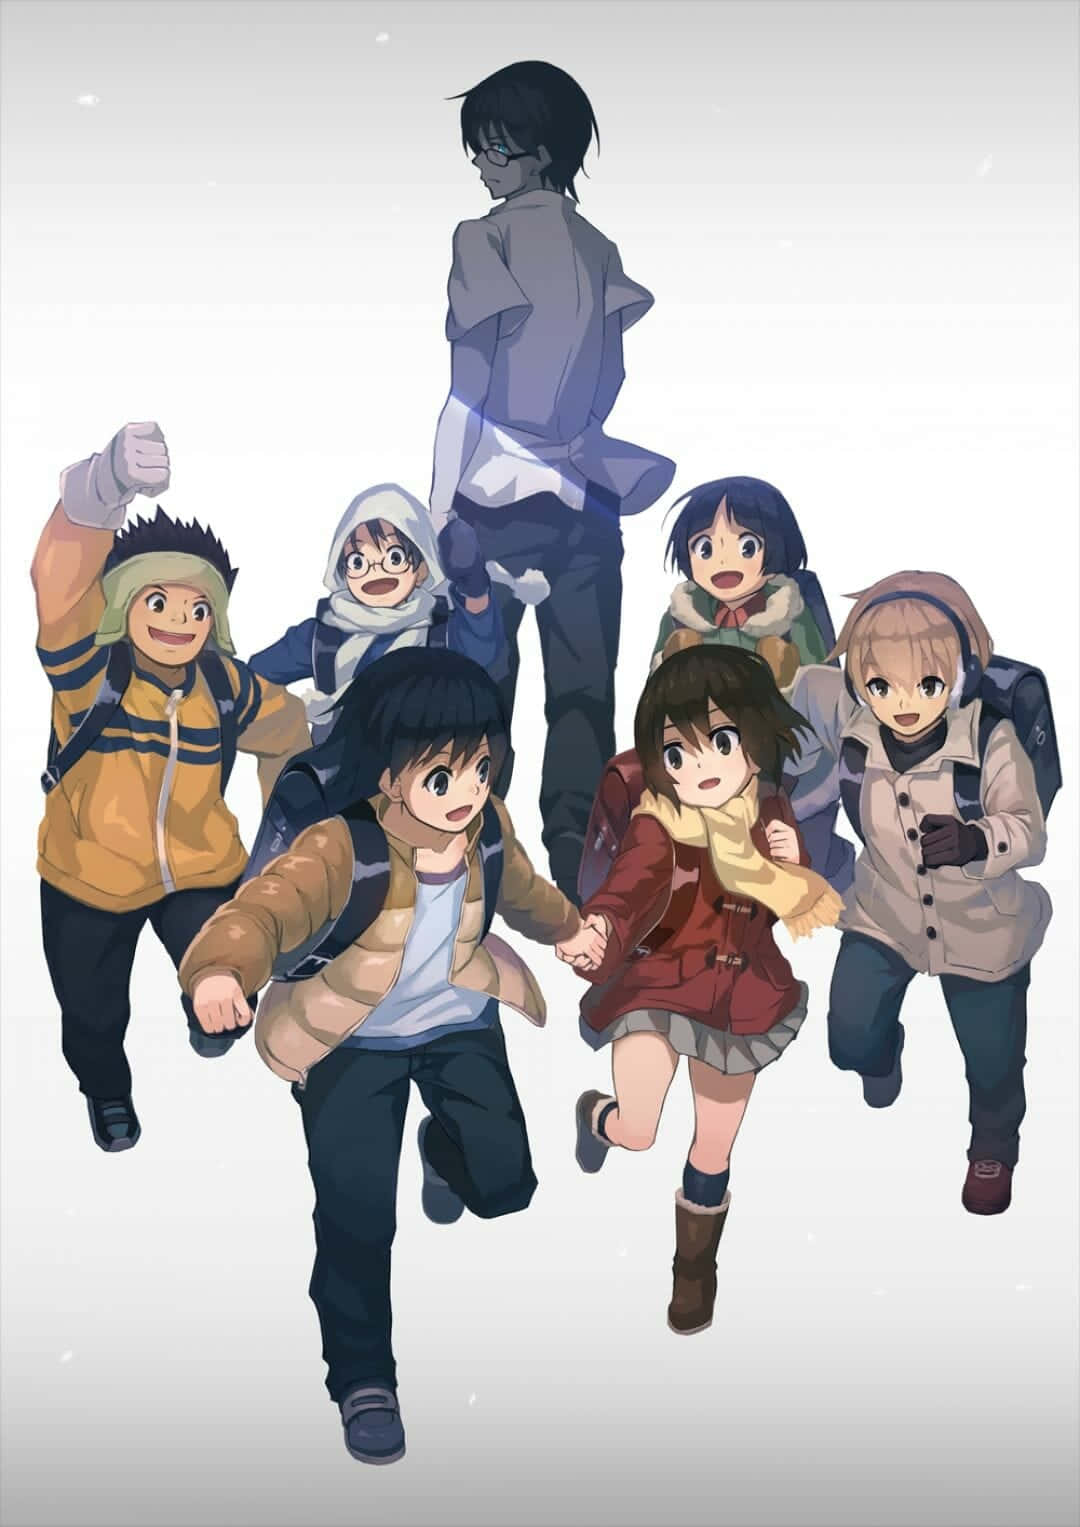 A poignant moment in Erased Anime featuring main characters Satoru, Kayo, Osamu, Kenya, and Hiromi. Wallpaper